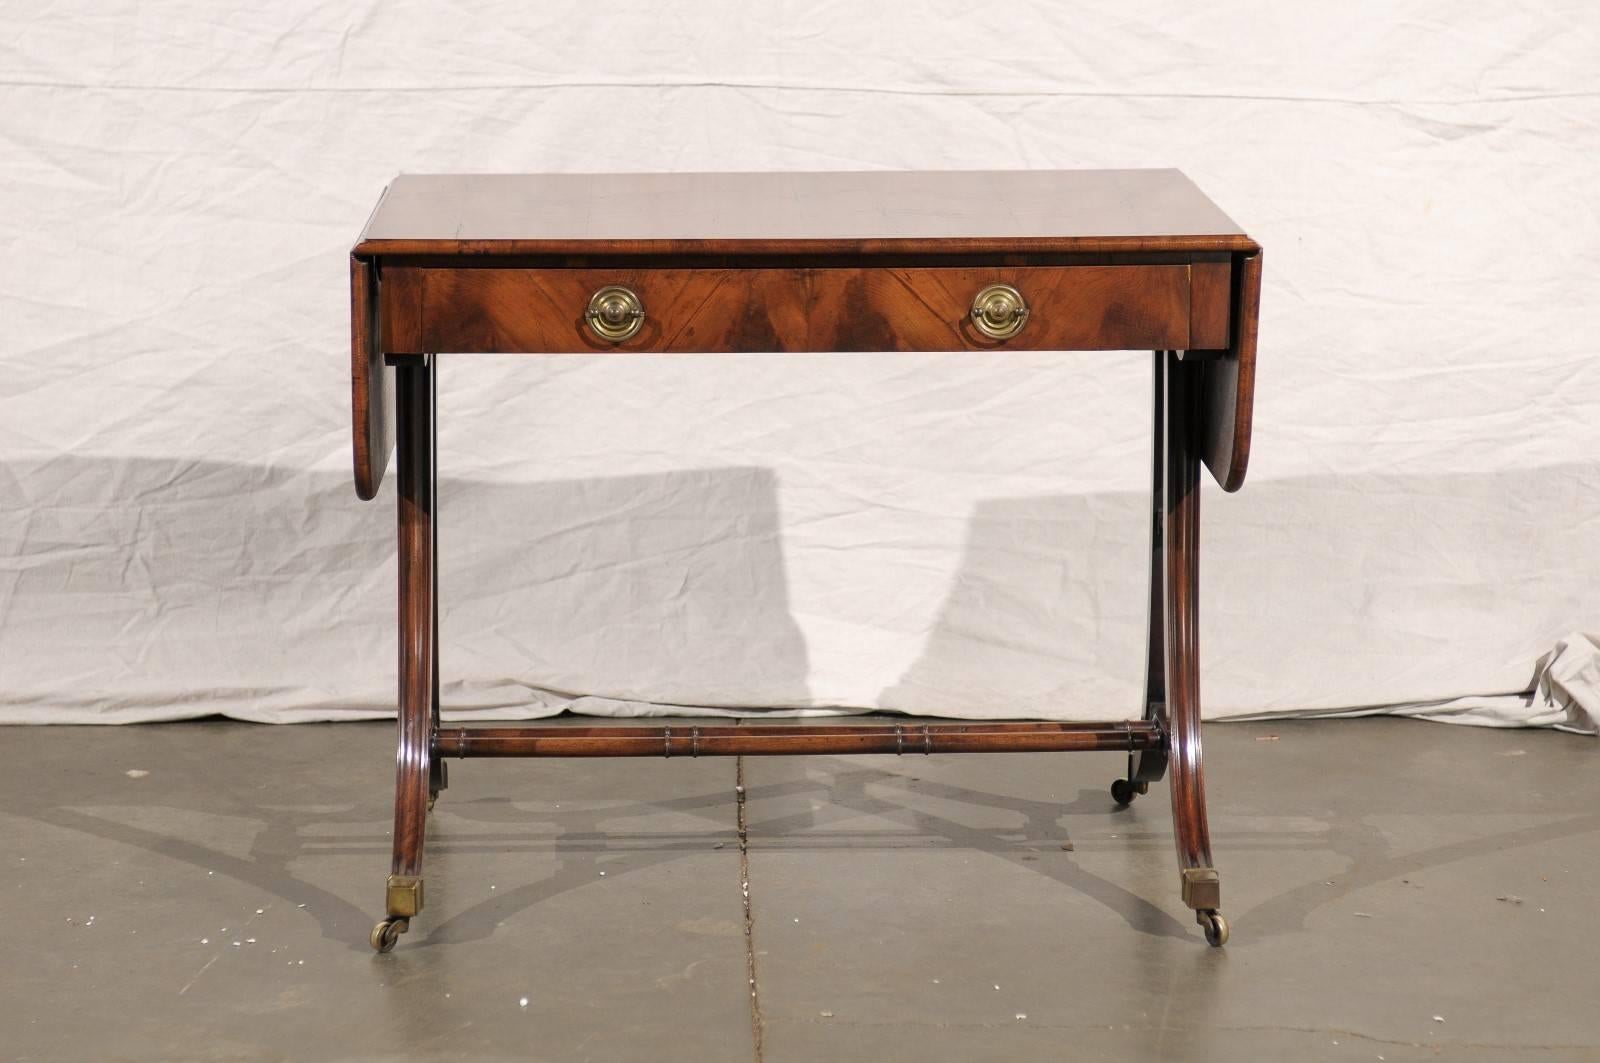 19th century English Regency style burled oyster veneer sofa table. Measures: 45